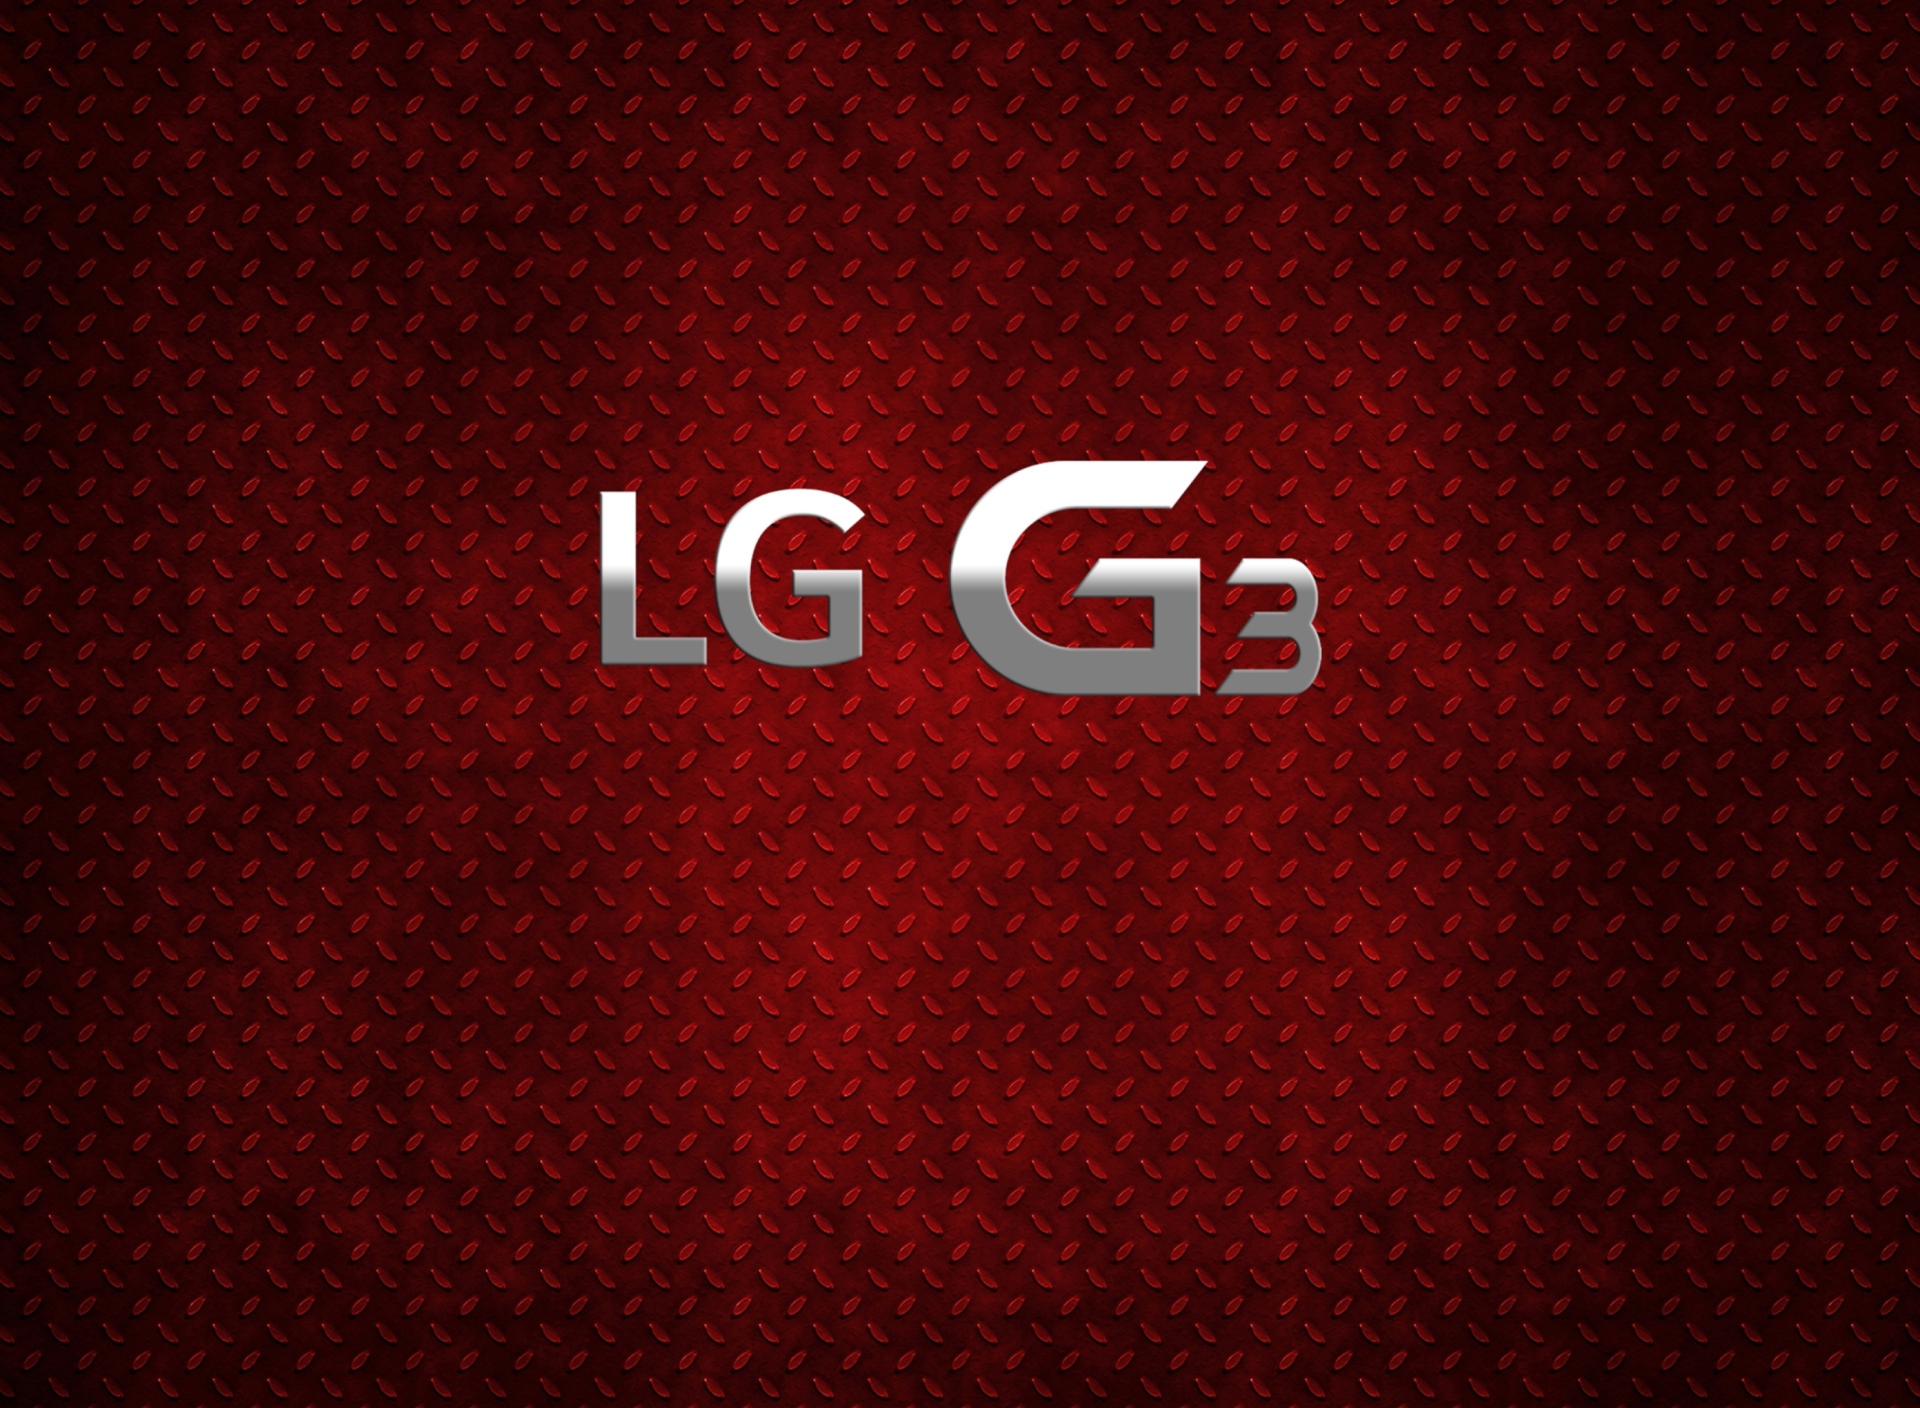 LG G3 wallpaper 1920x1408